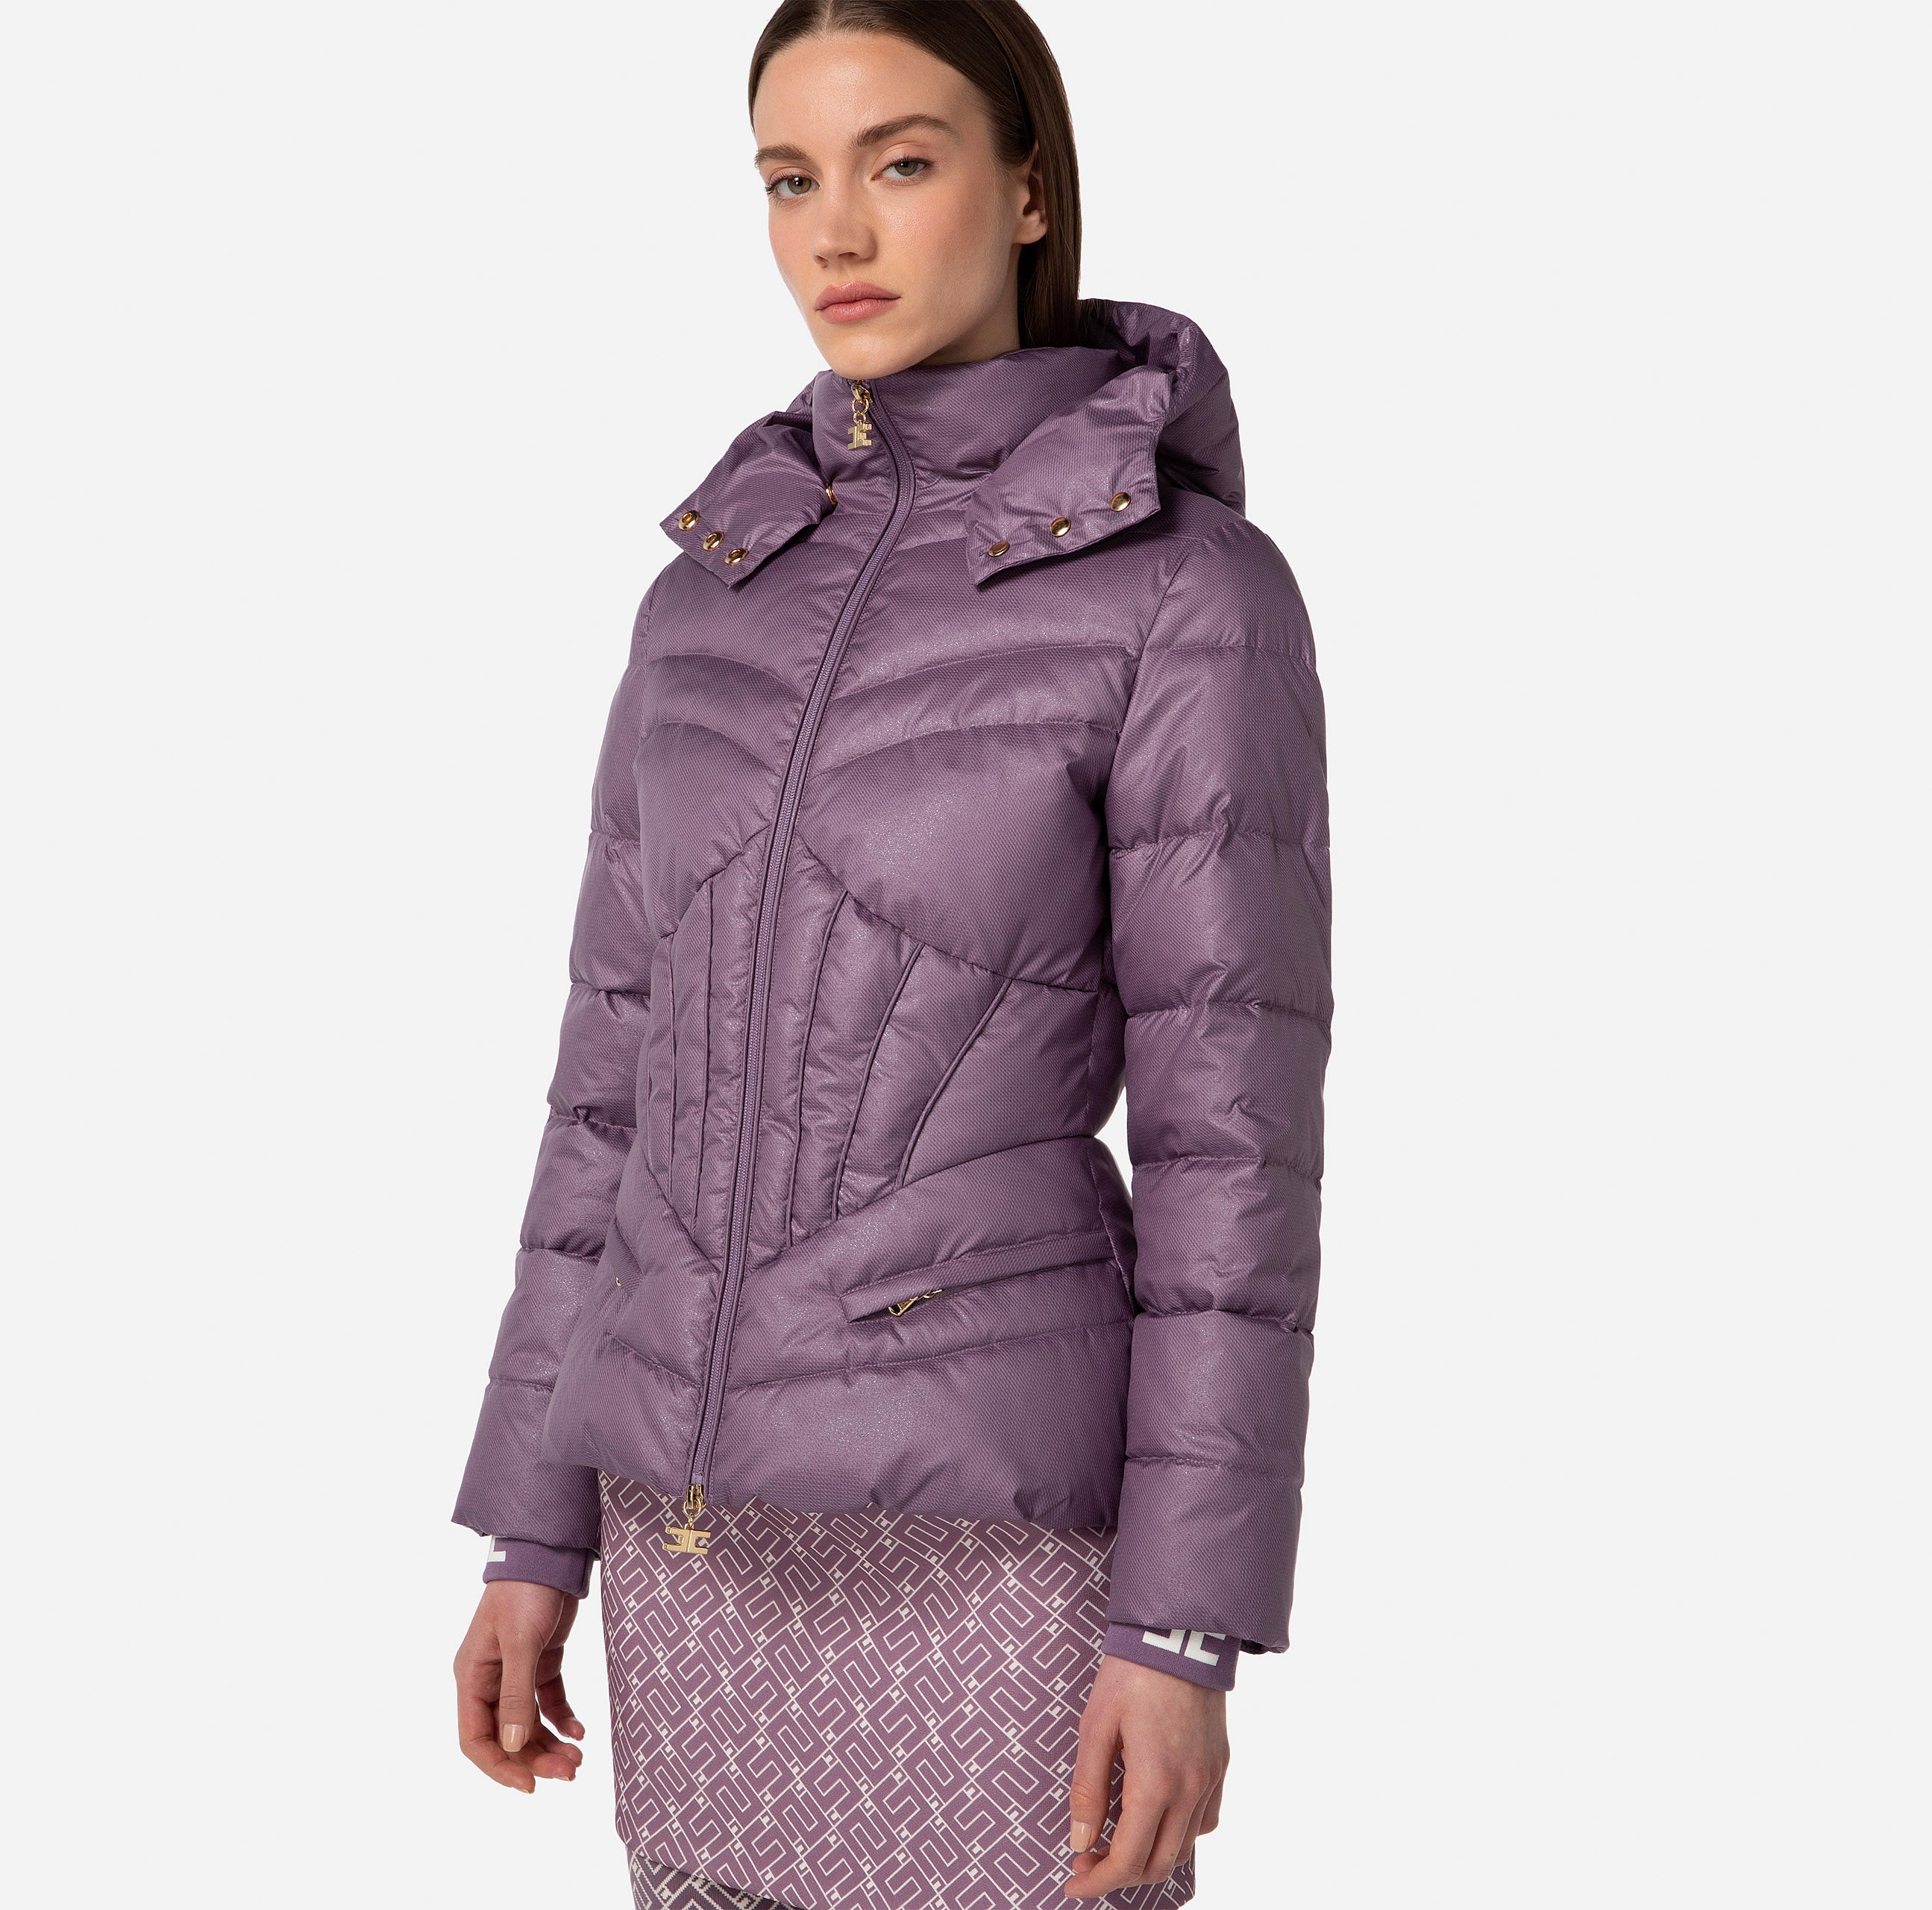 Elisabetta Franchi Women's Jacket PI59H36E2 Candy violet